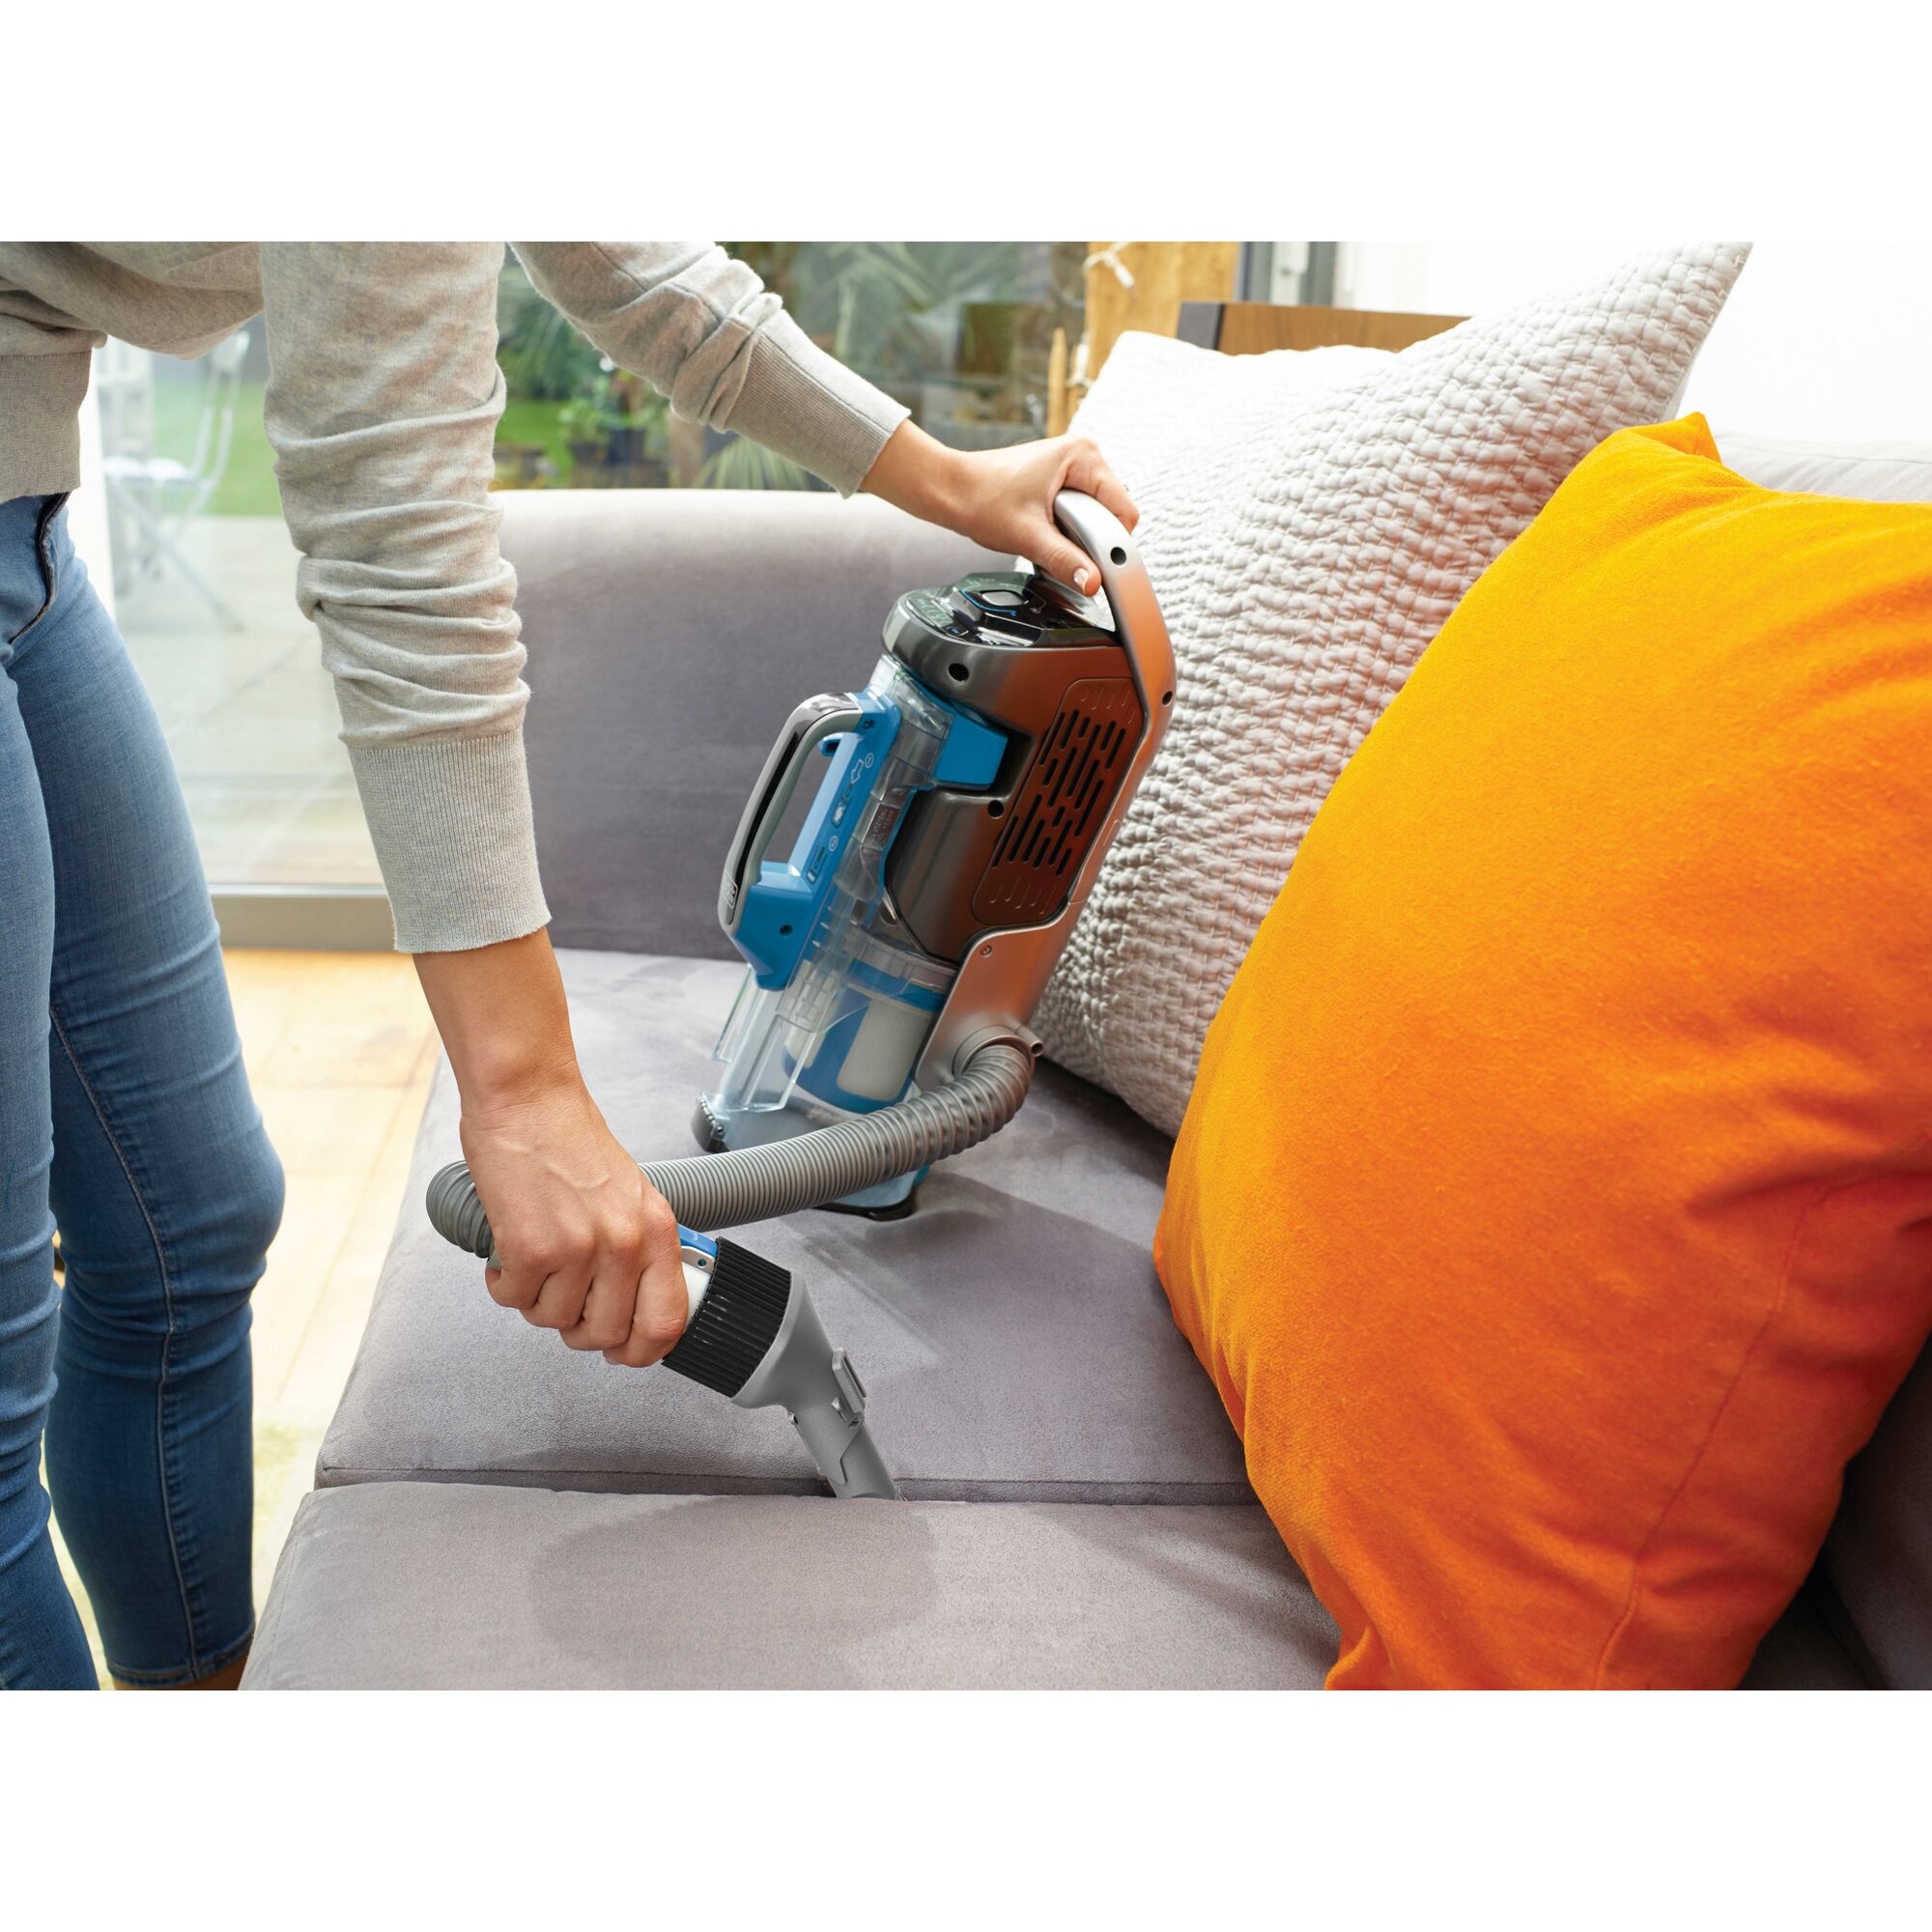 Person using handheld feature of BLACK+DECKER cordless vacuum on sofa